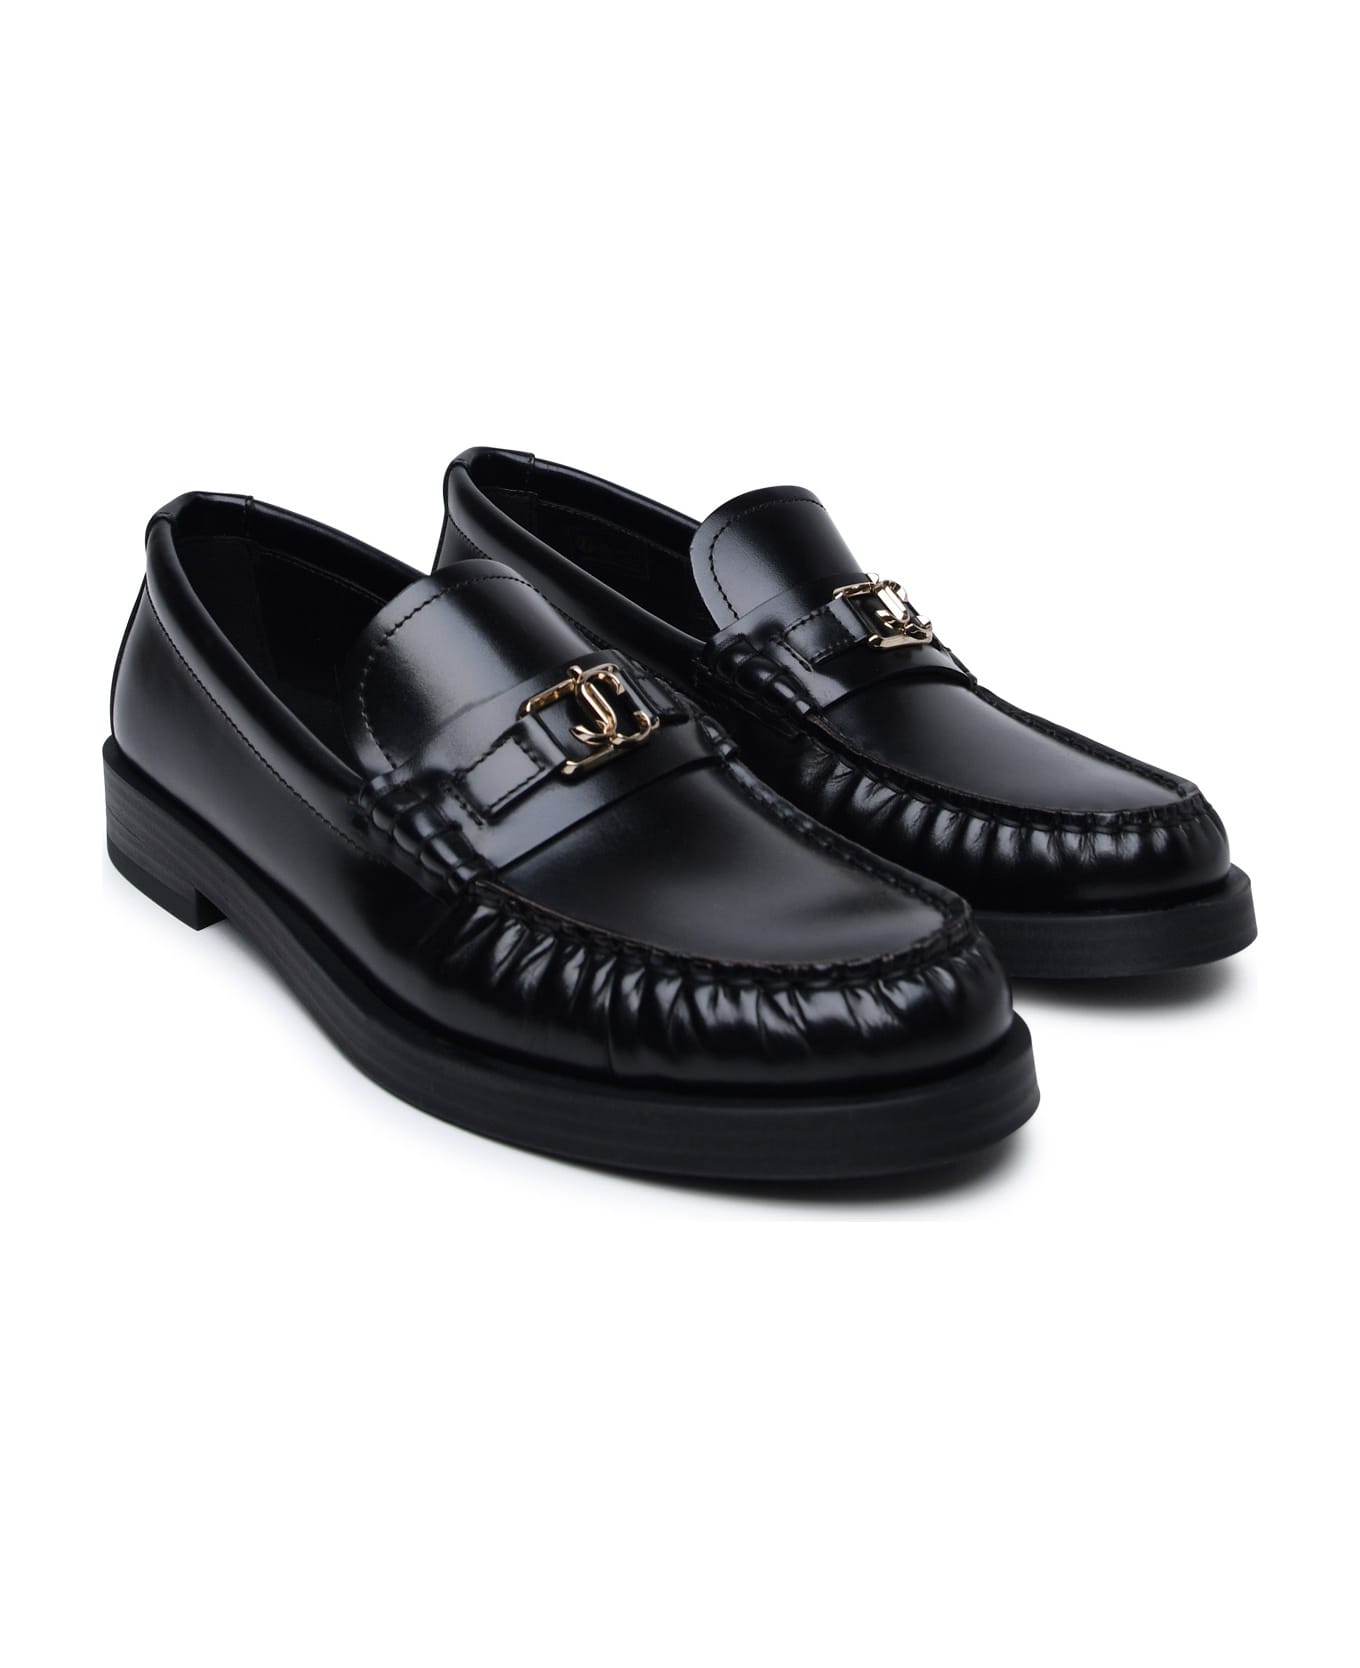 Jimmy Choo Black Leather Loafers - Black フラットシューズ